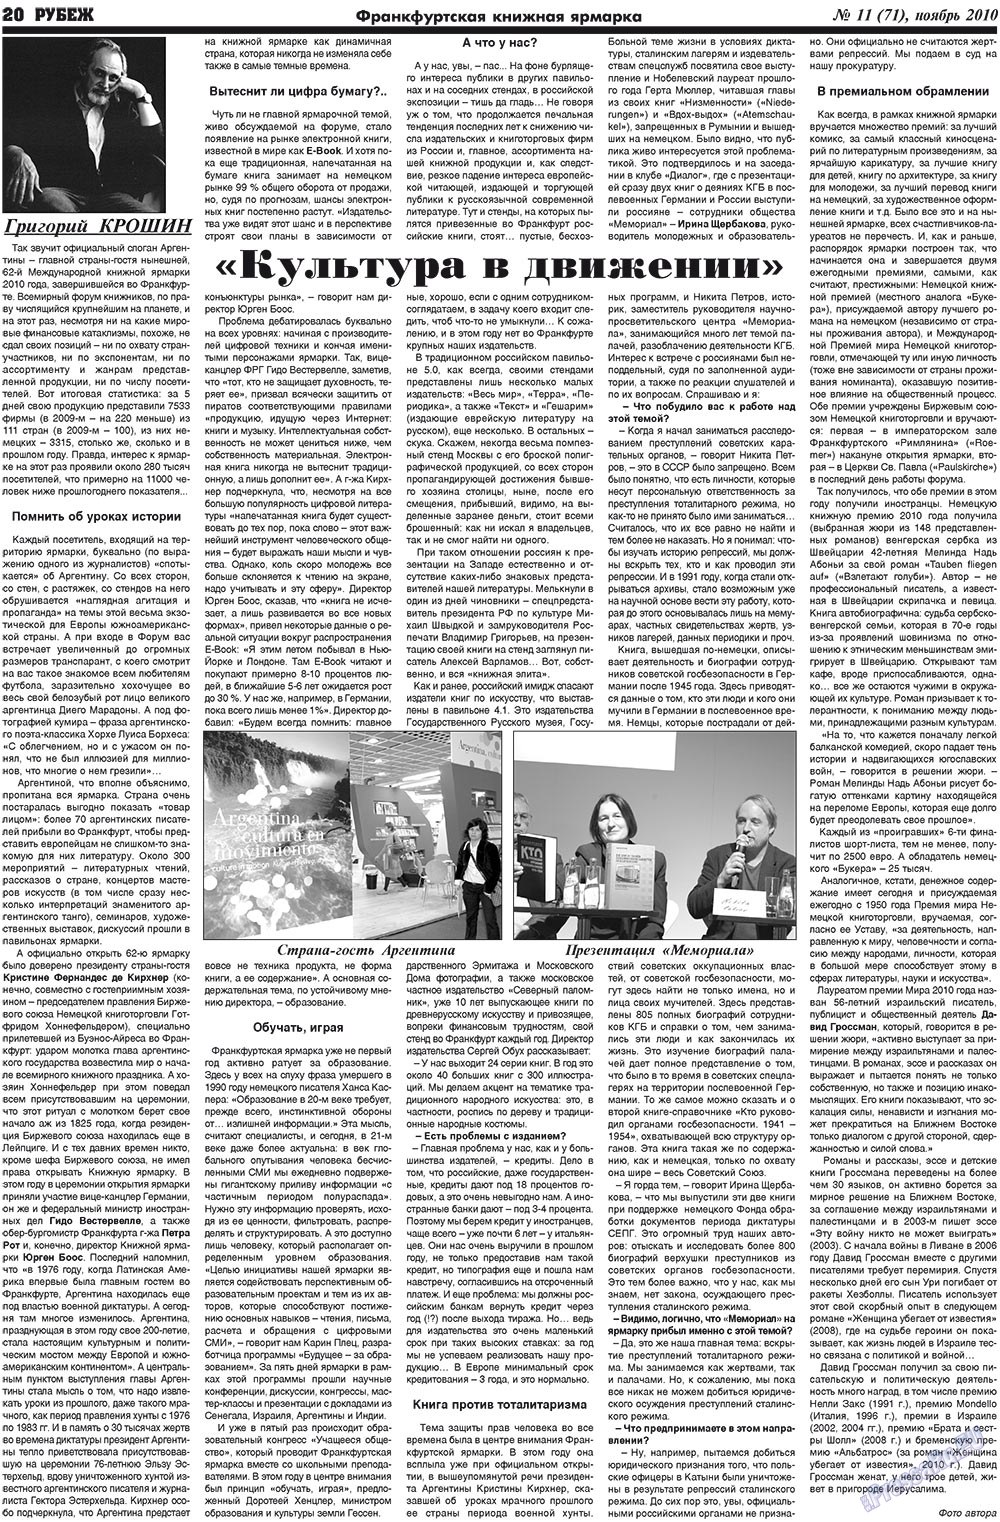 Рубеж, газета. 2010 №11 стр.20